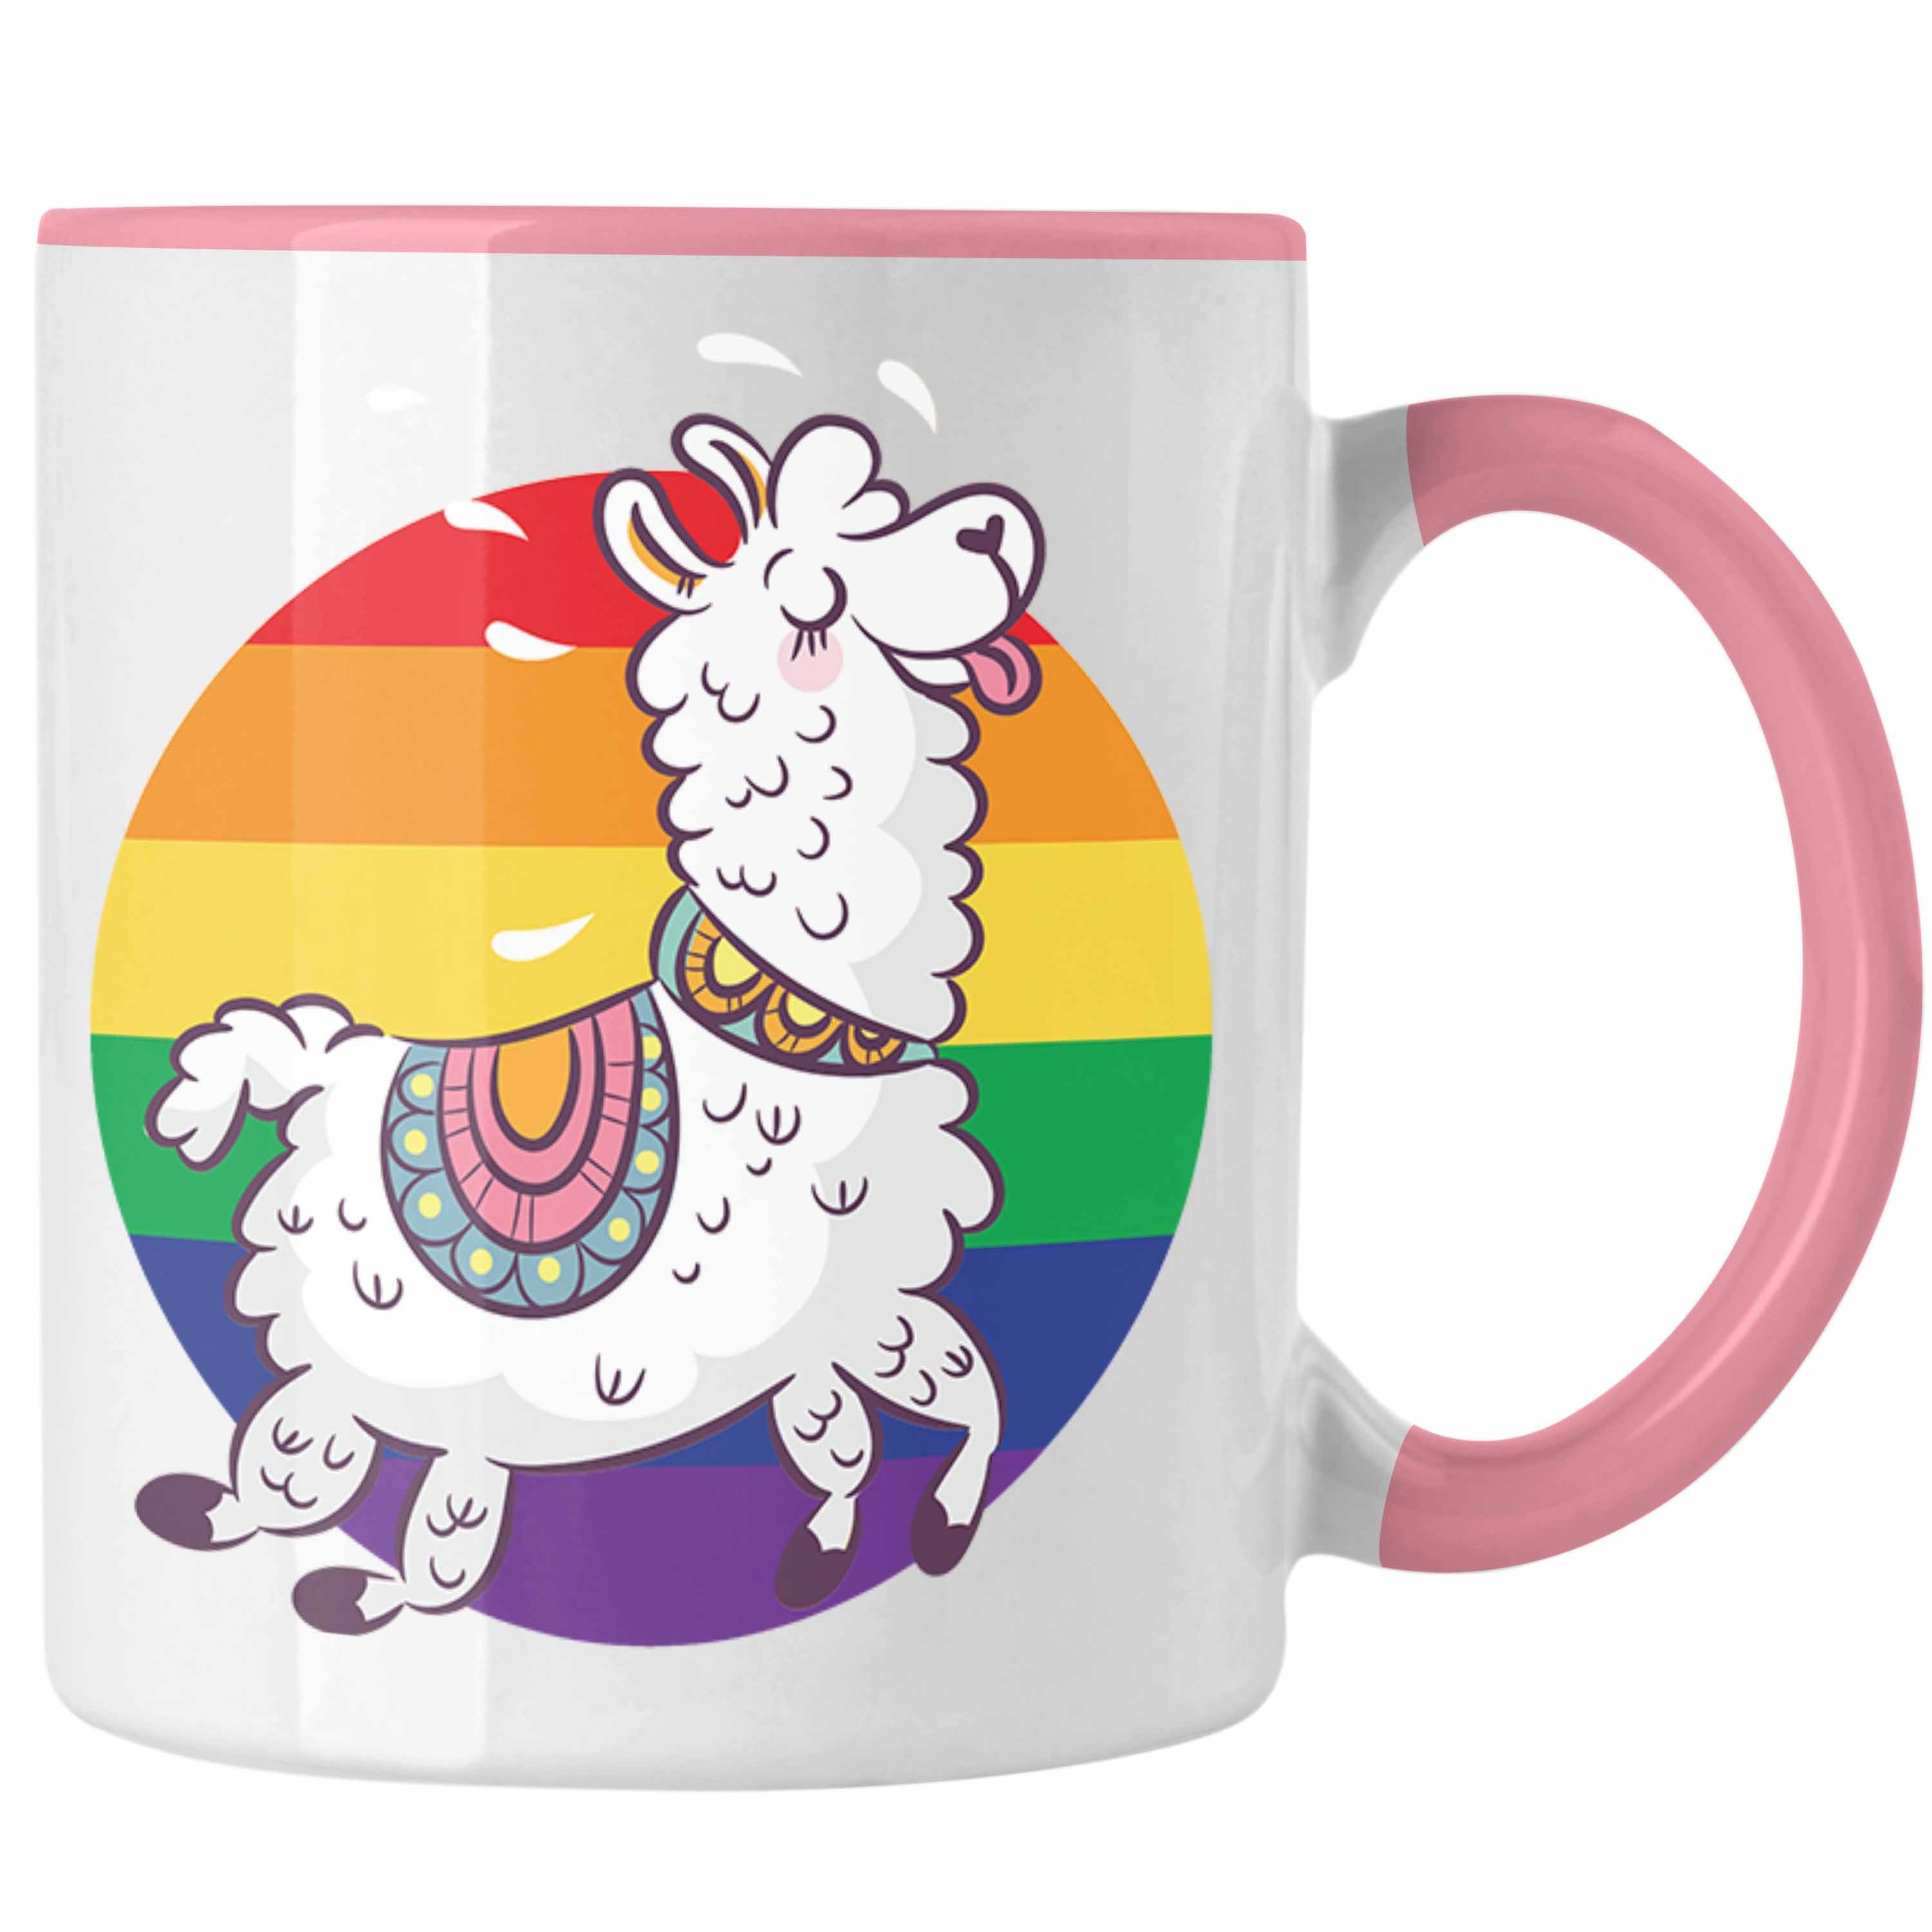 Trendation Tasse Trendation - Regenbogen Tasse Geschenk LGBT Schwule Lesben Transgender Grafik Pride Tolles Llama Rosa